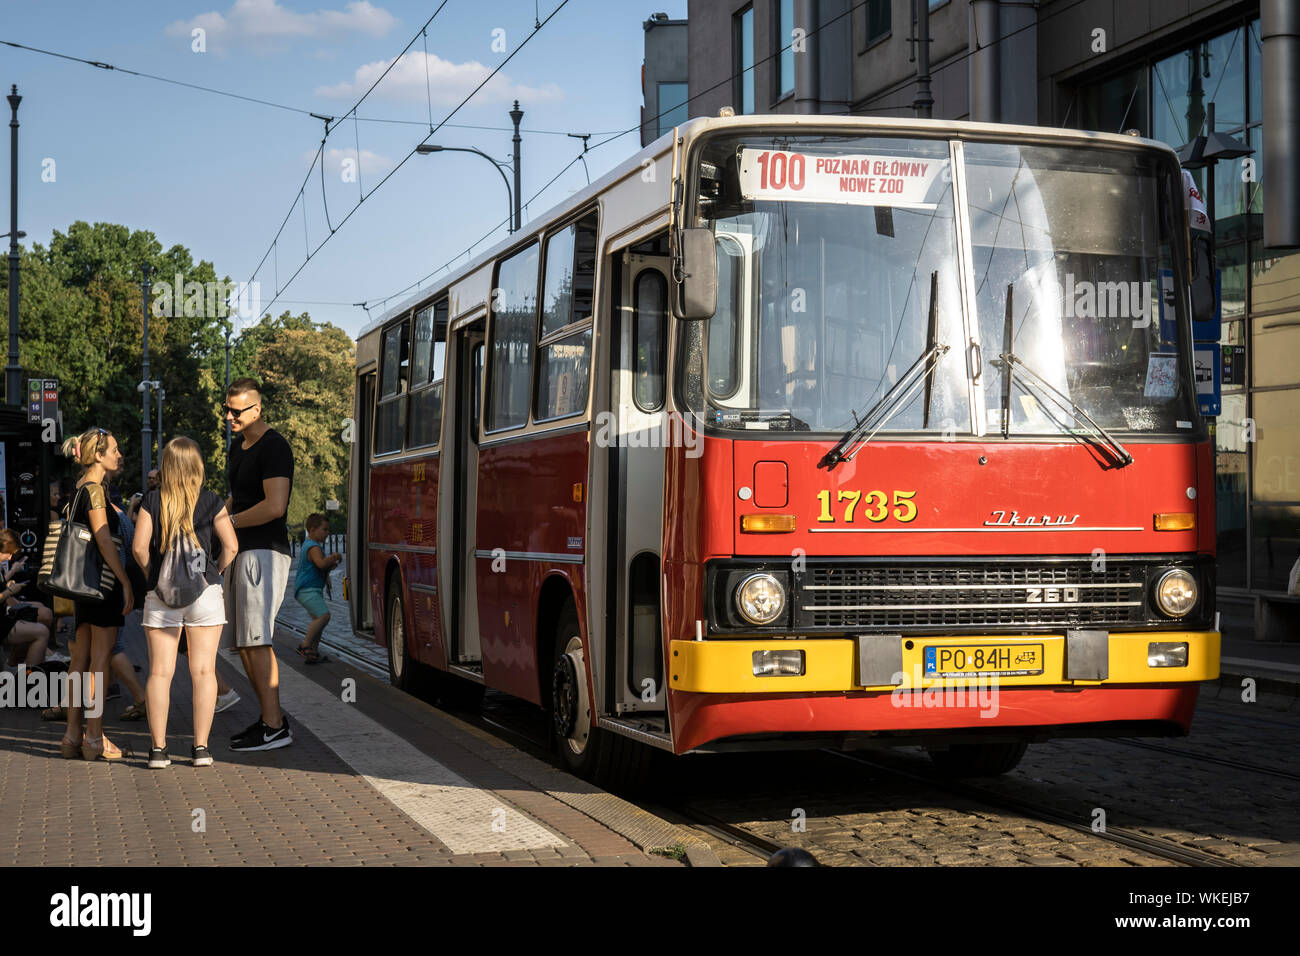 Poznan, Poland - August 31, 2019: Hop on hop off tourist line vintage bus in the city center. Stock Photo